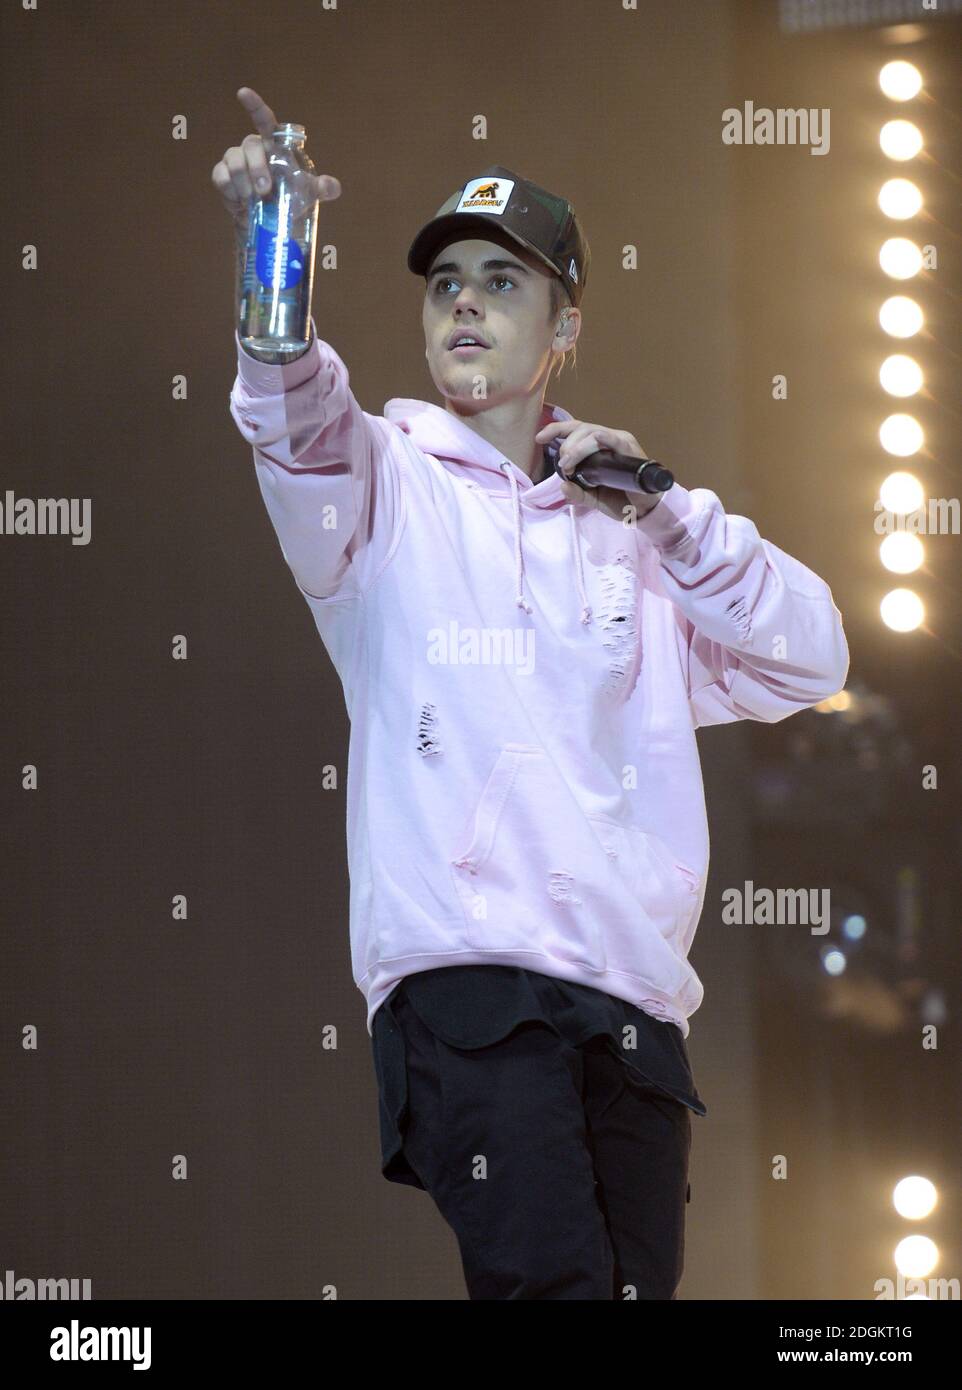 Justin Bieber actúa en el escenario durante la Capital FM Jingle Bell Ball 2015 celebrada en el O2 Arena, Londres. El crédito de la foto debe decir: Doug Peters EMPICS Entertainment Foto de stock